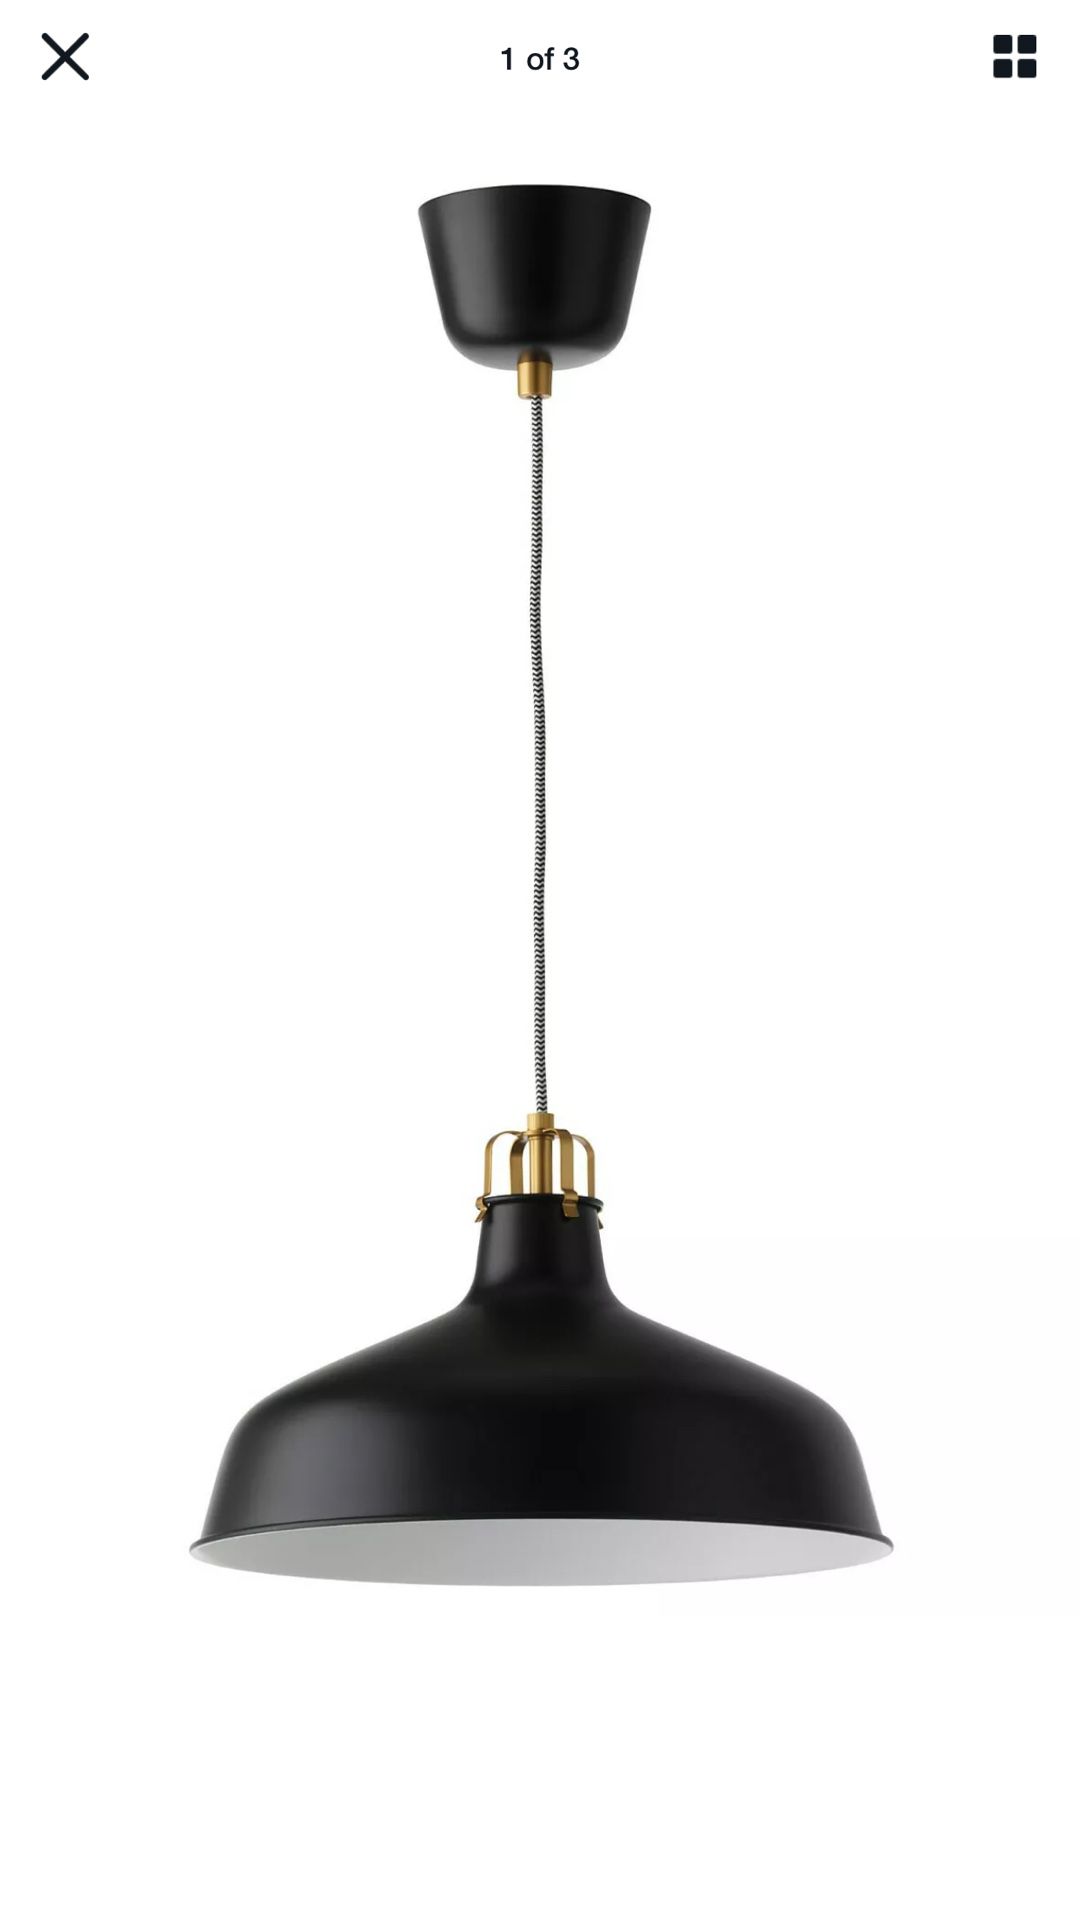 RANARP bronze look Pendant hanging lamp, black15 "